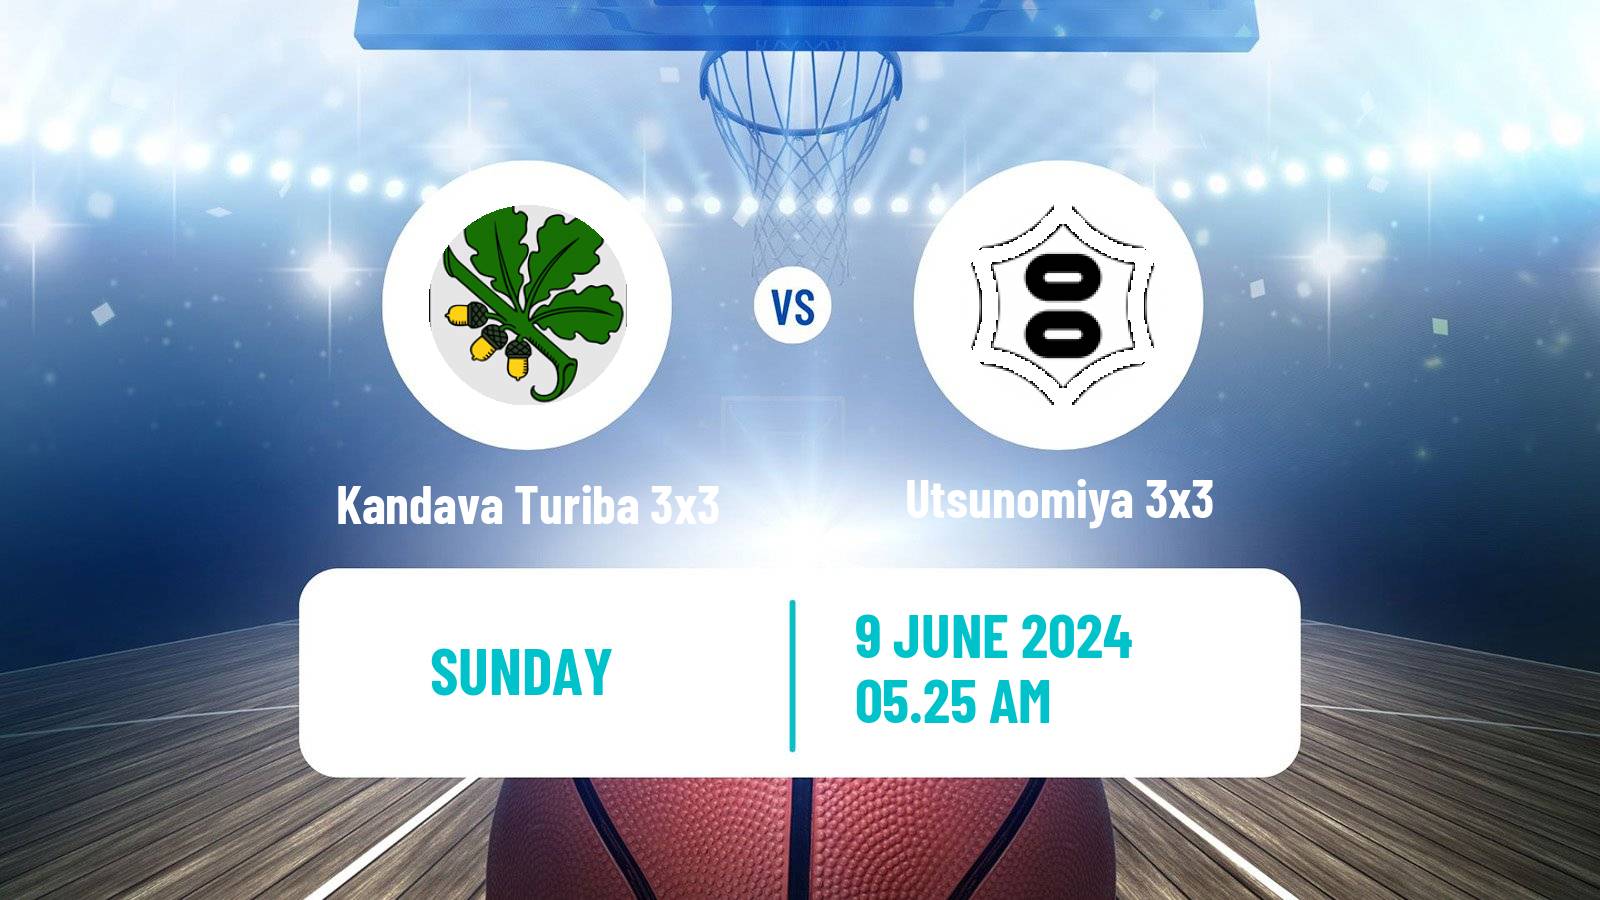 Basketball World Tour Ulaanbaatar 3x3 Kandava Turiba 3x3 - Utsunomiya 3x3